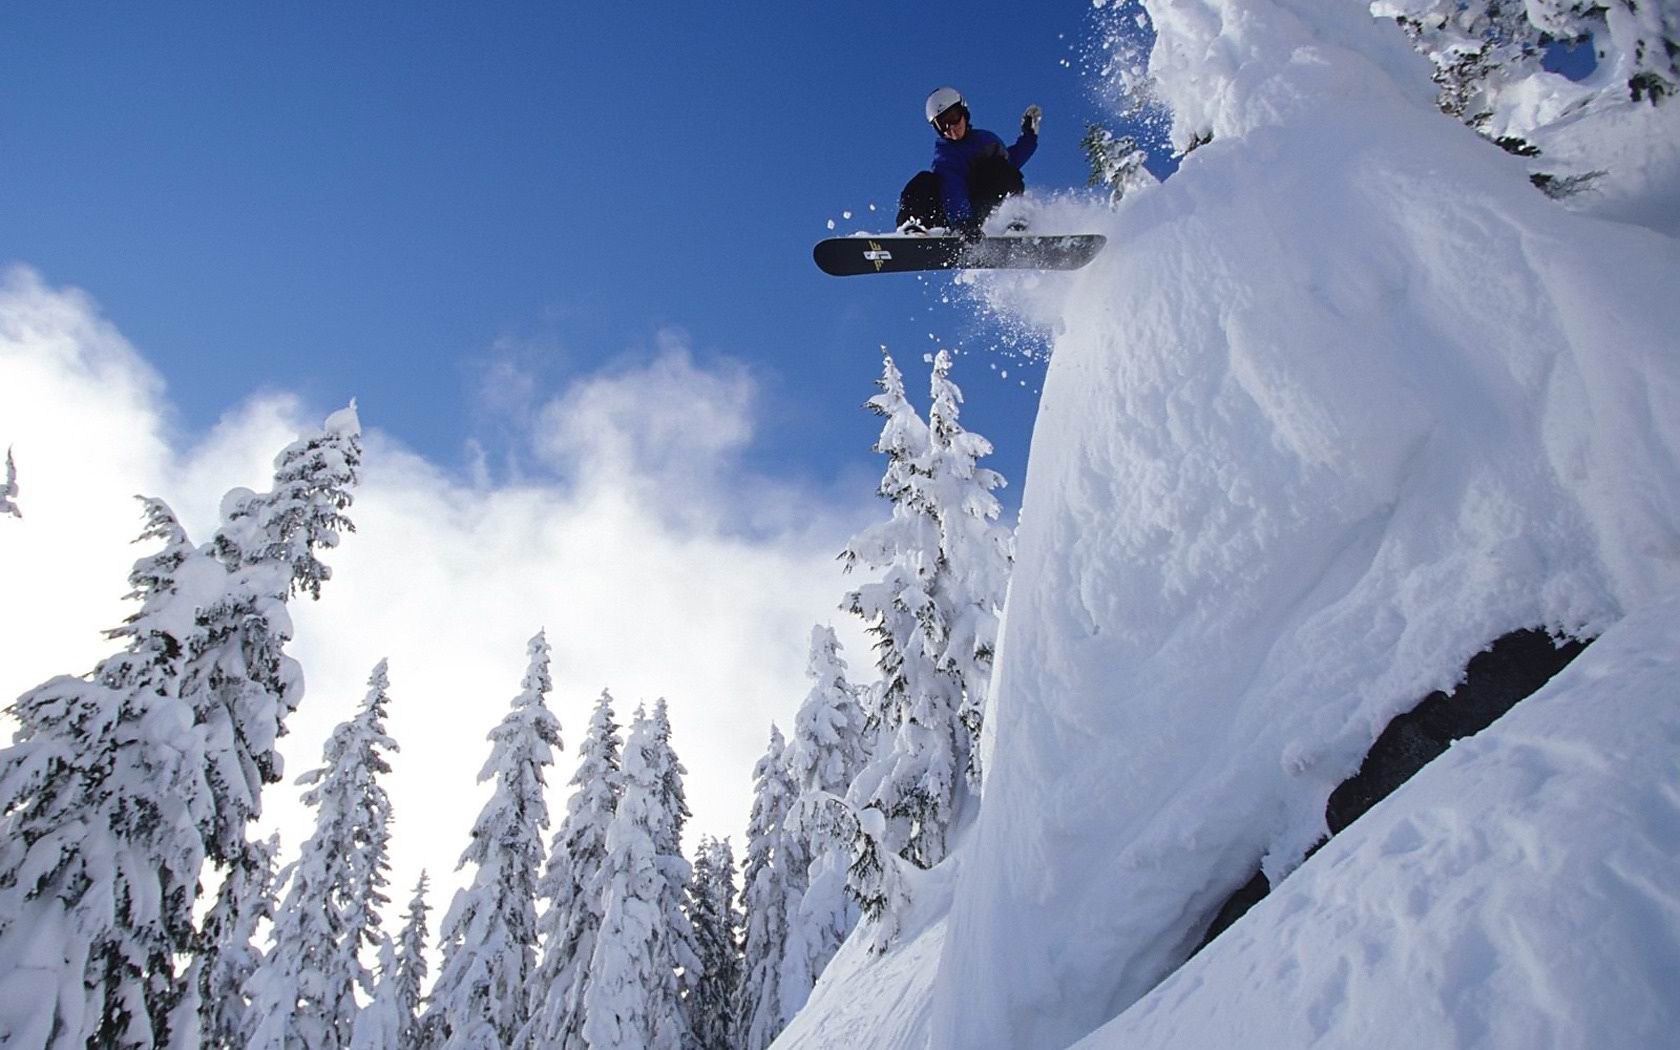 Download full size Snowboarding wallpaper / Sports / 1680x1050